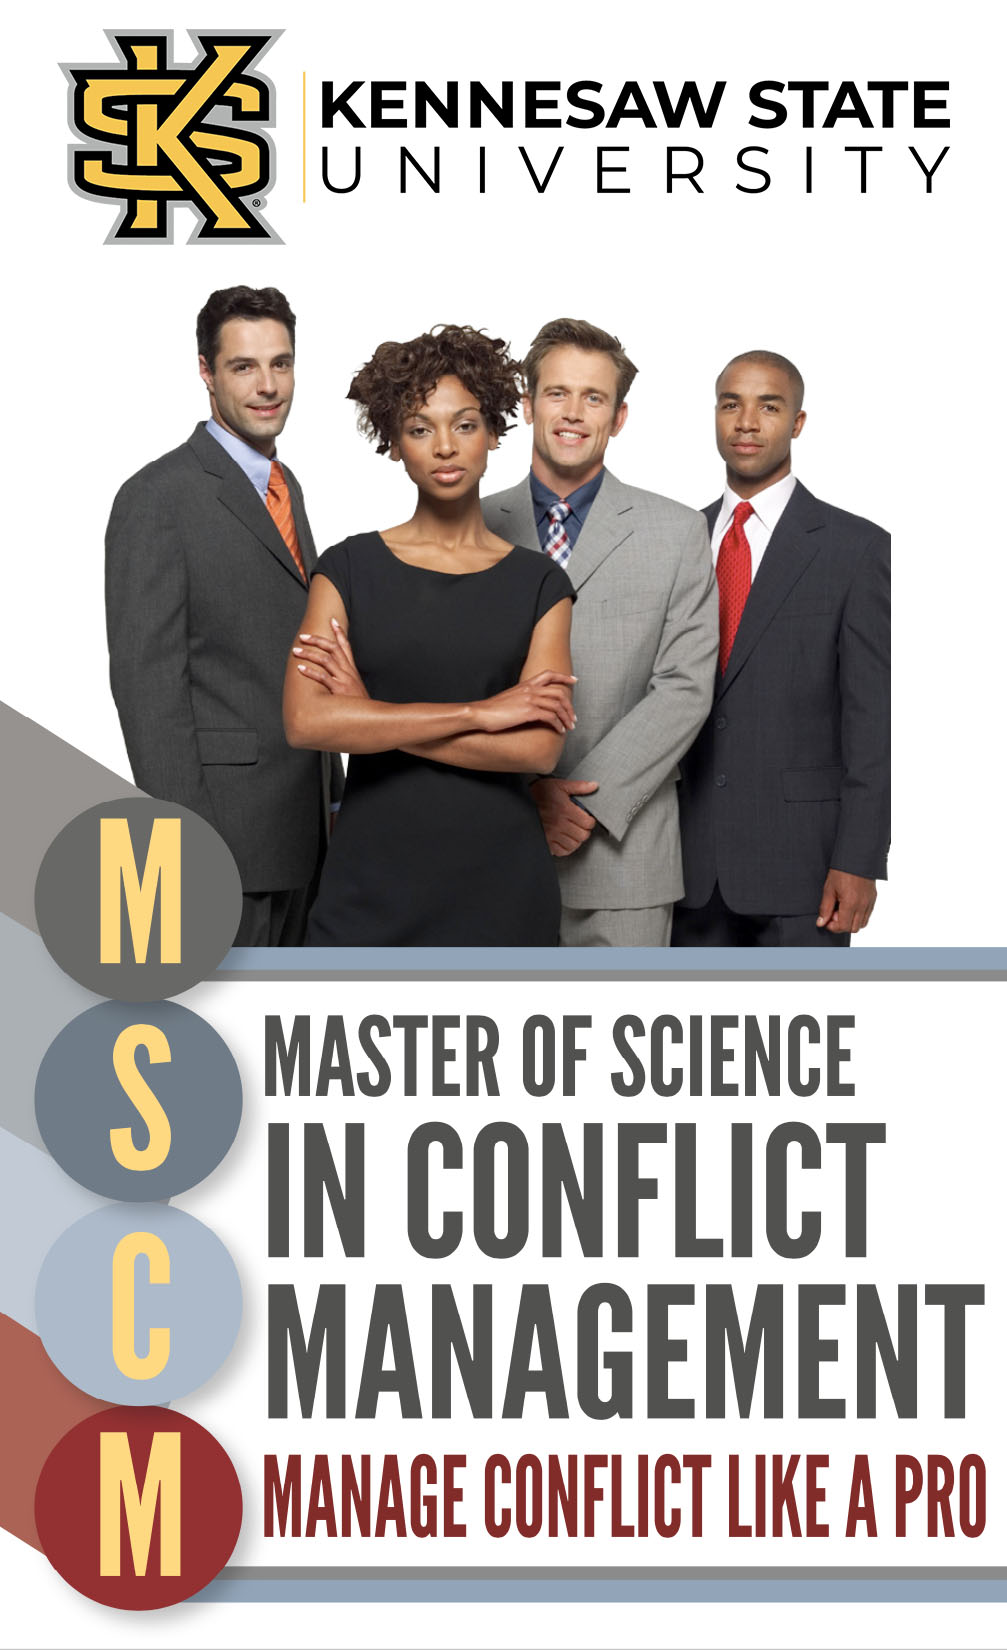 MS in Conflict Management at KSU